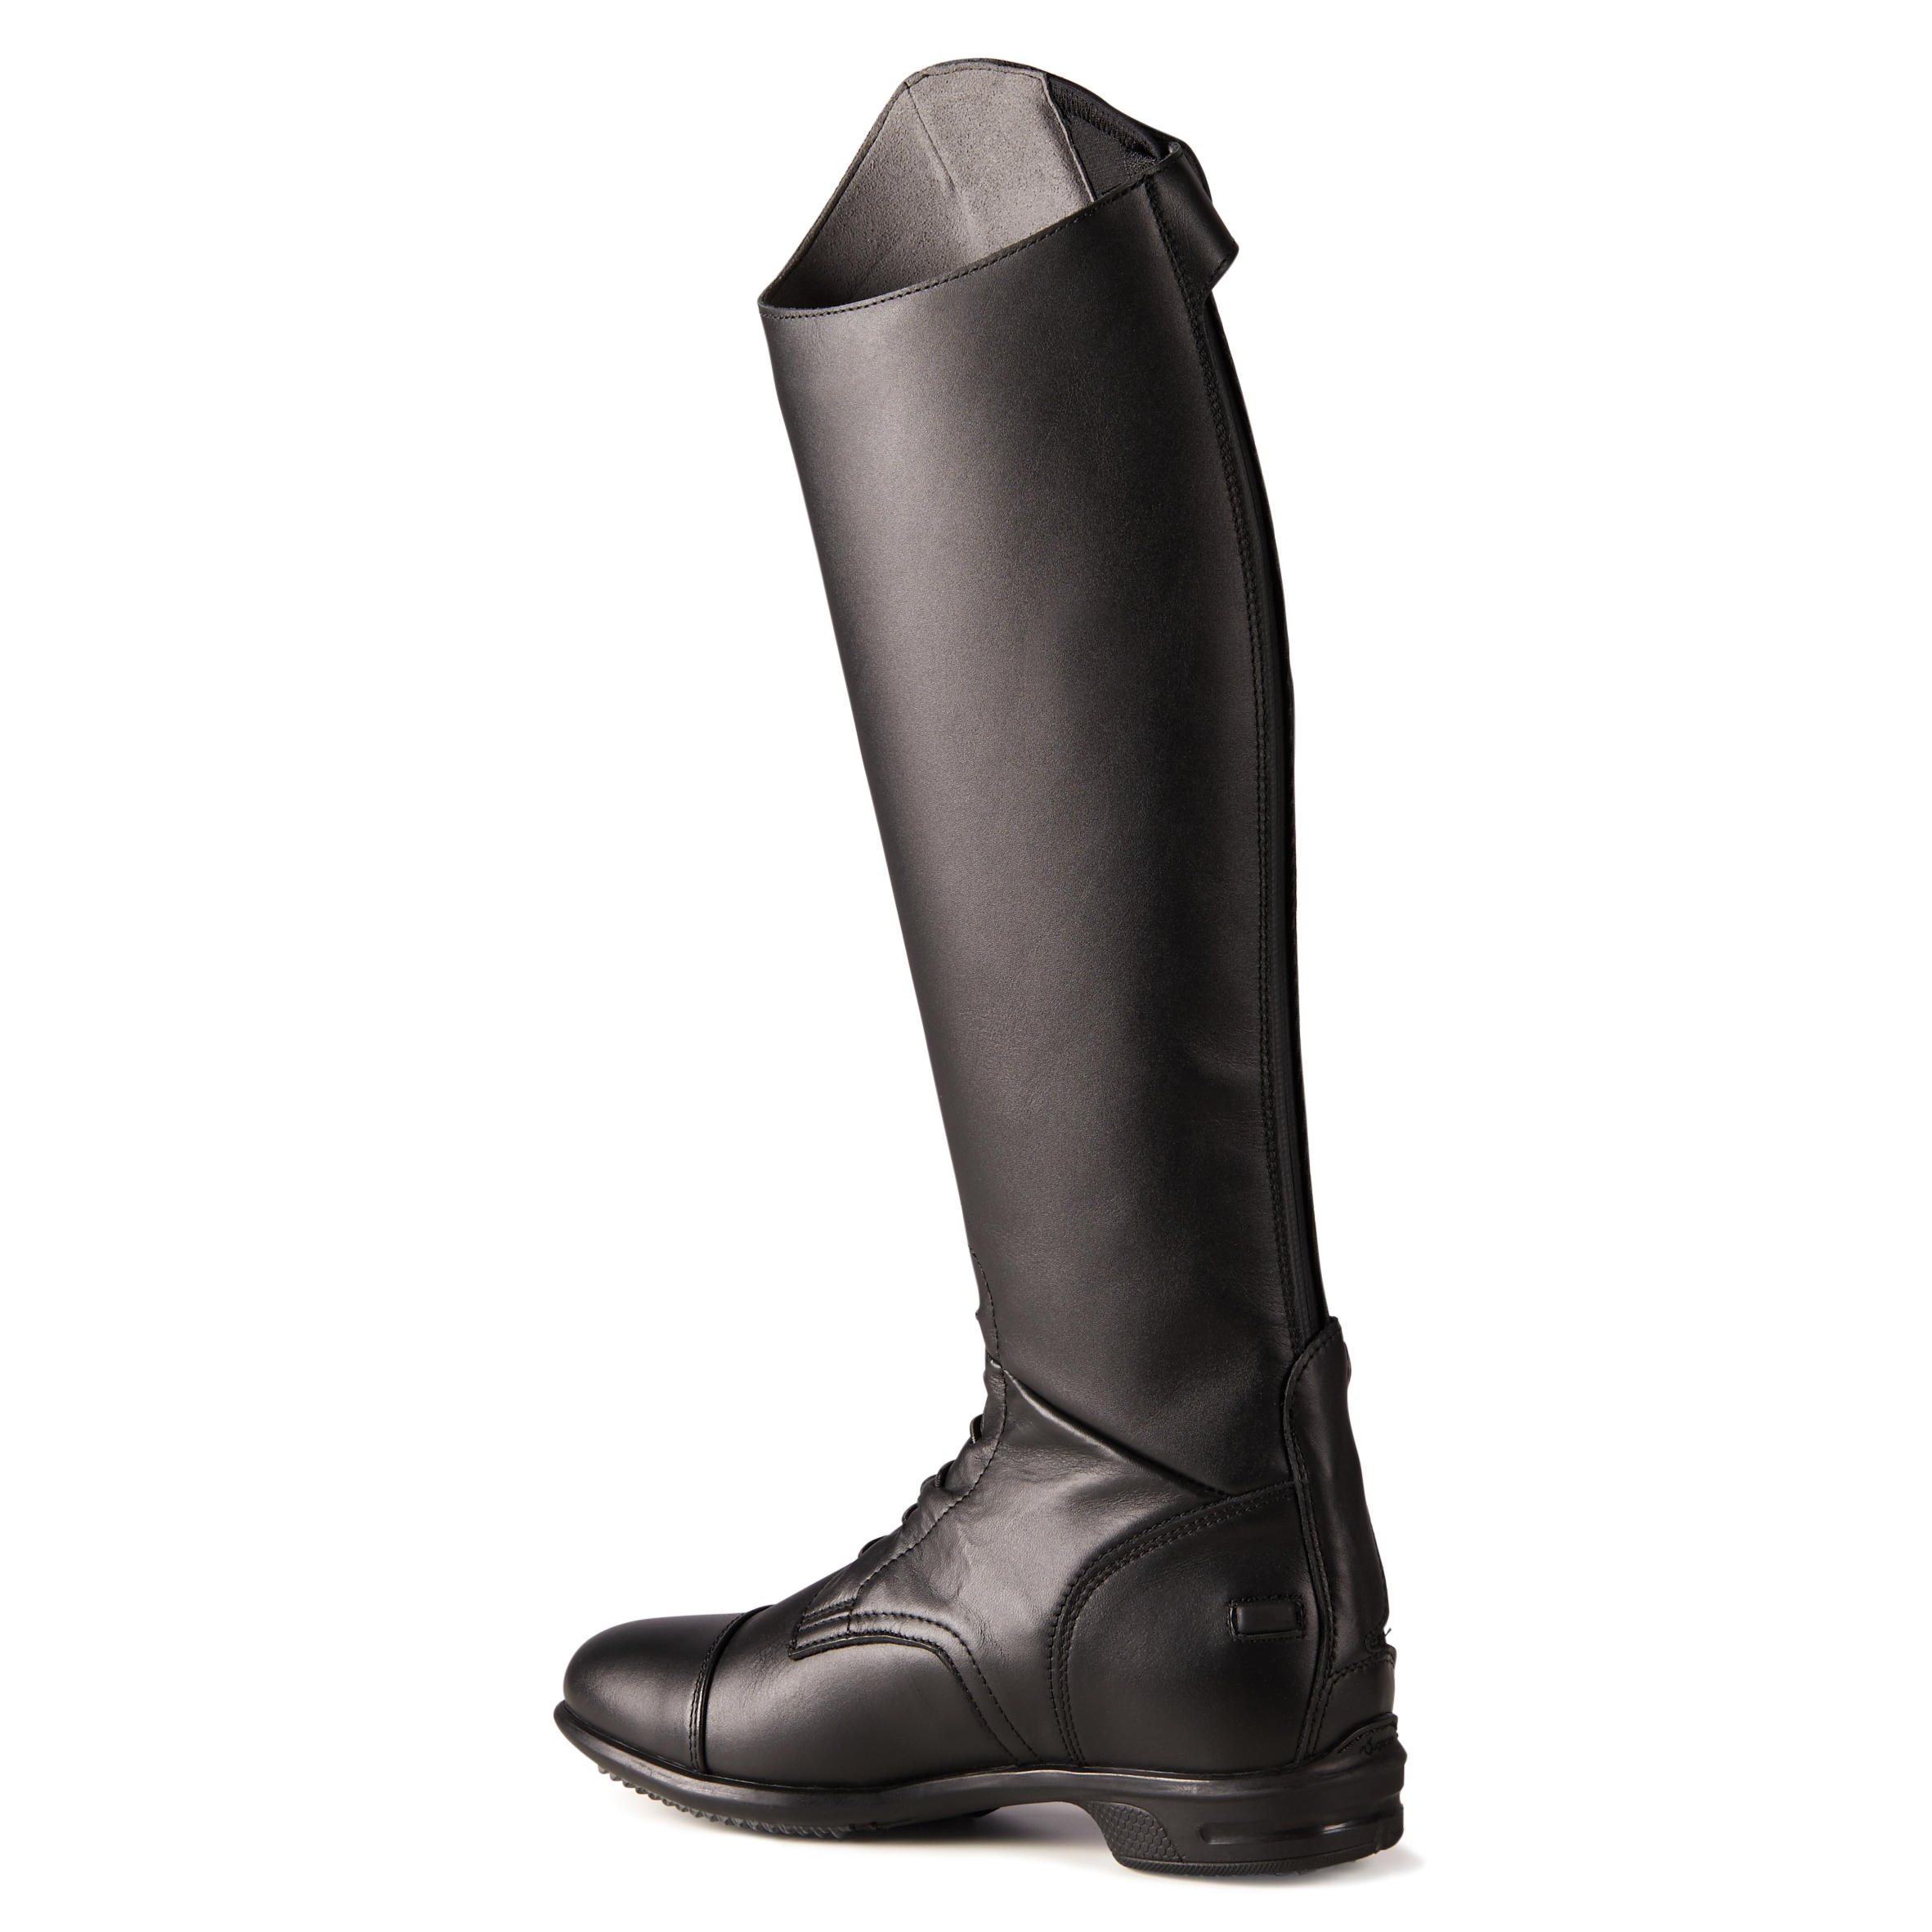 Adult Equestrian Boots 900 Jump Second Choice Calf Size L - Black 4/17